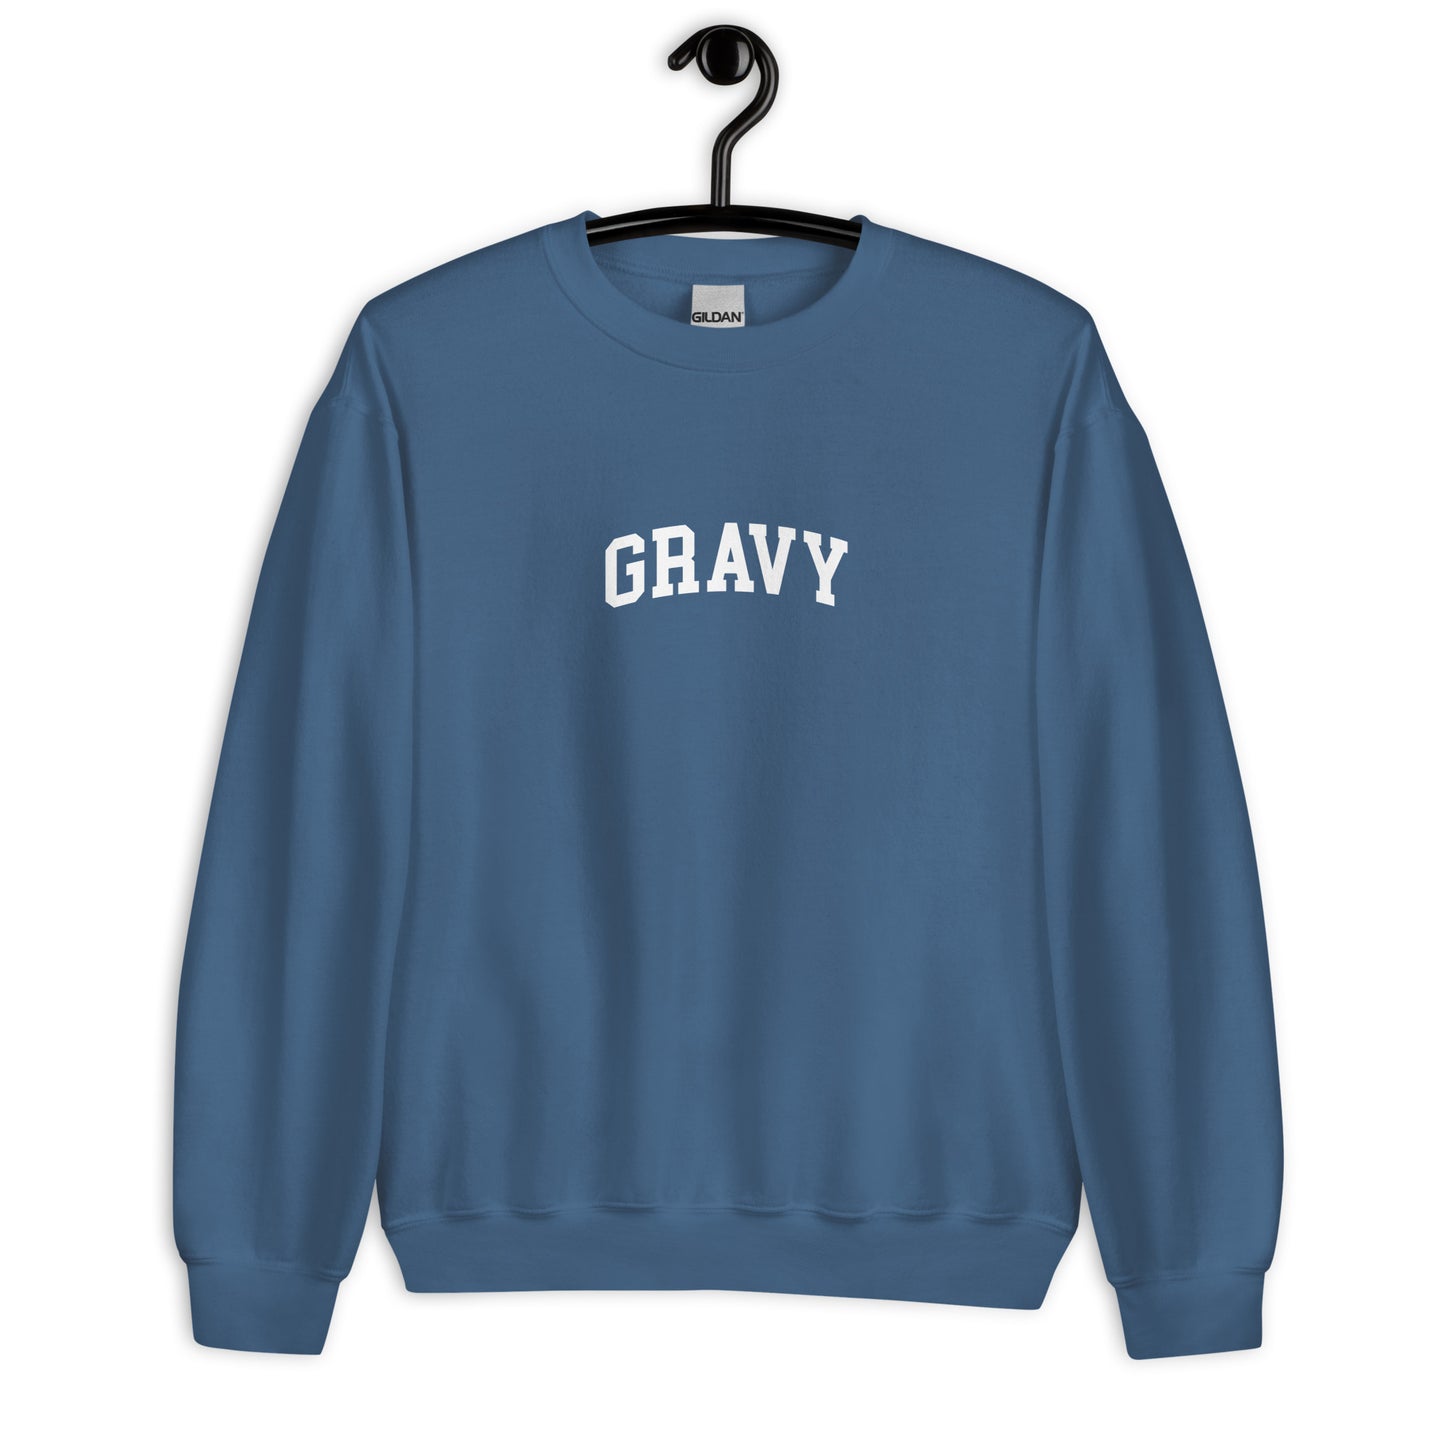 Gravy Sweatshirt - Arched Font